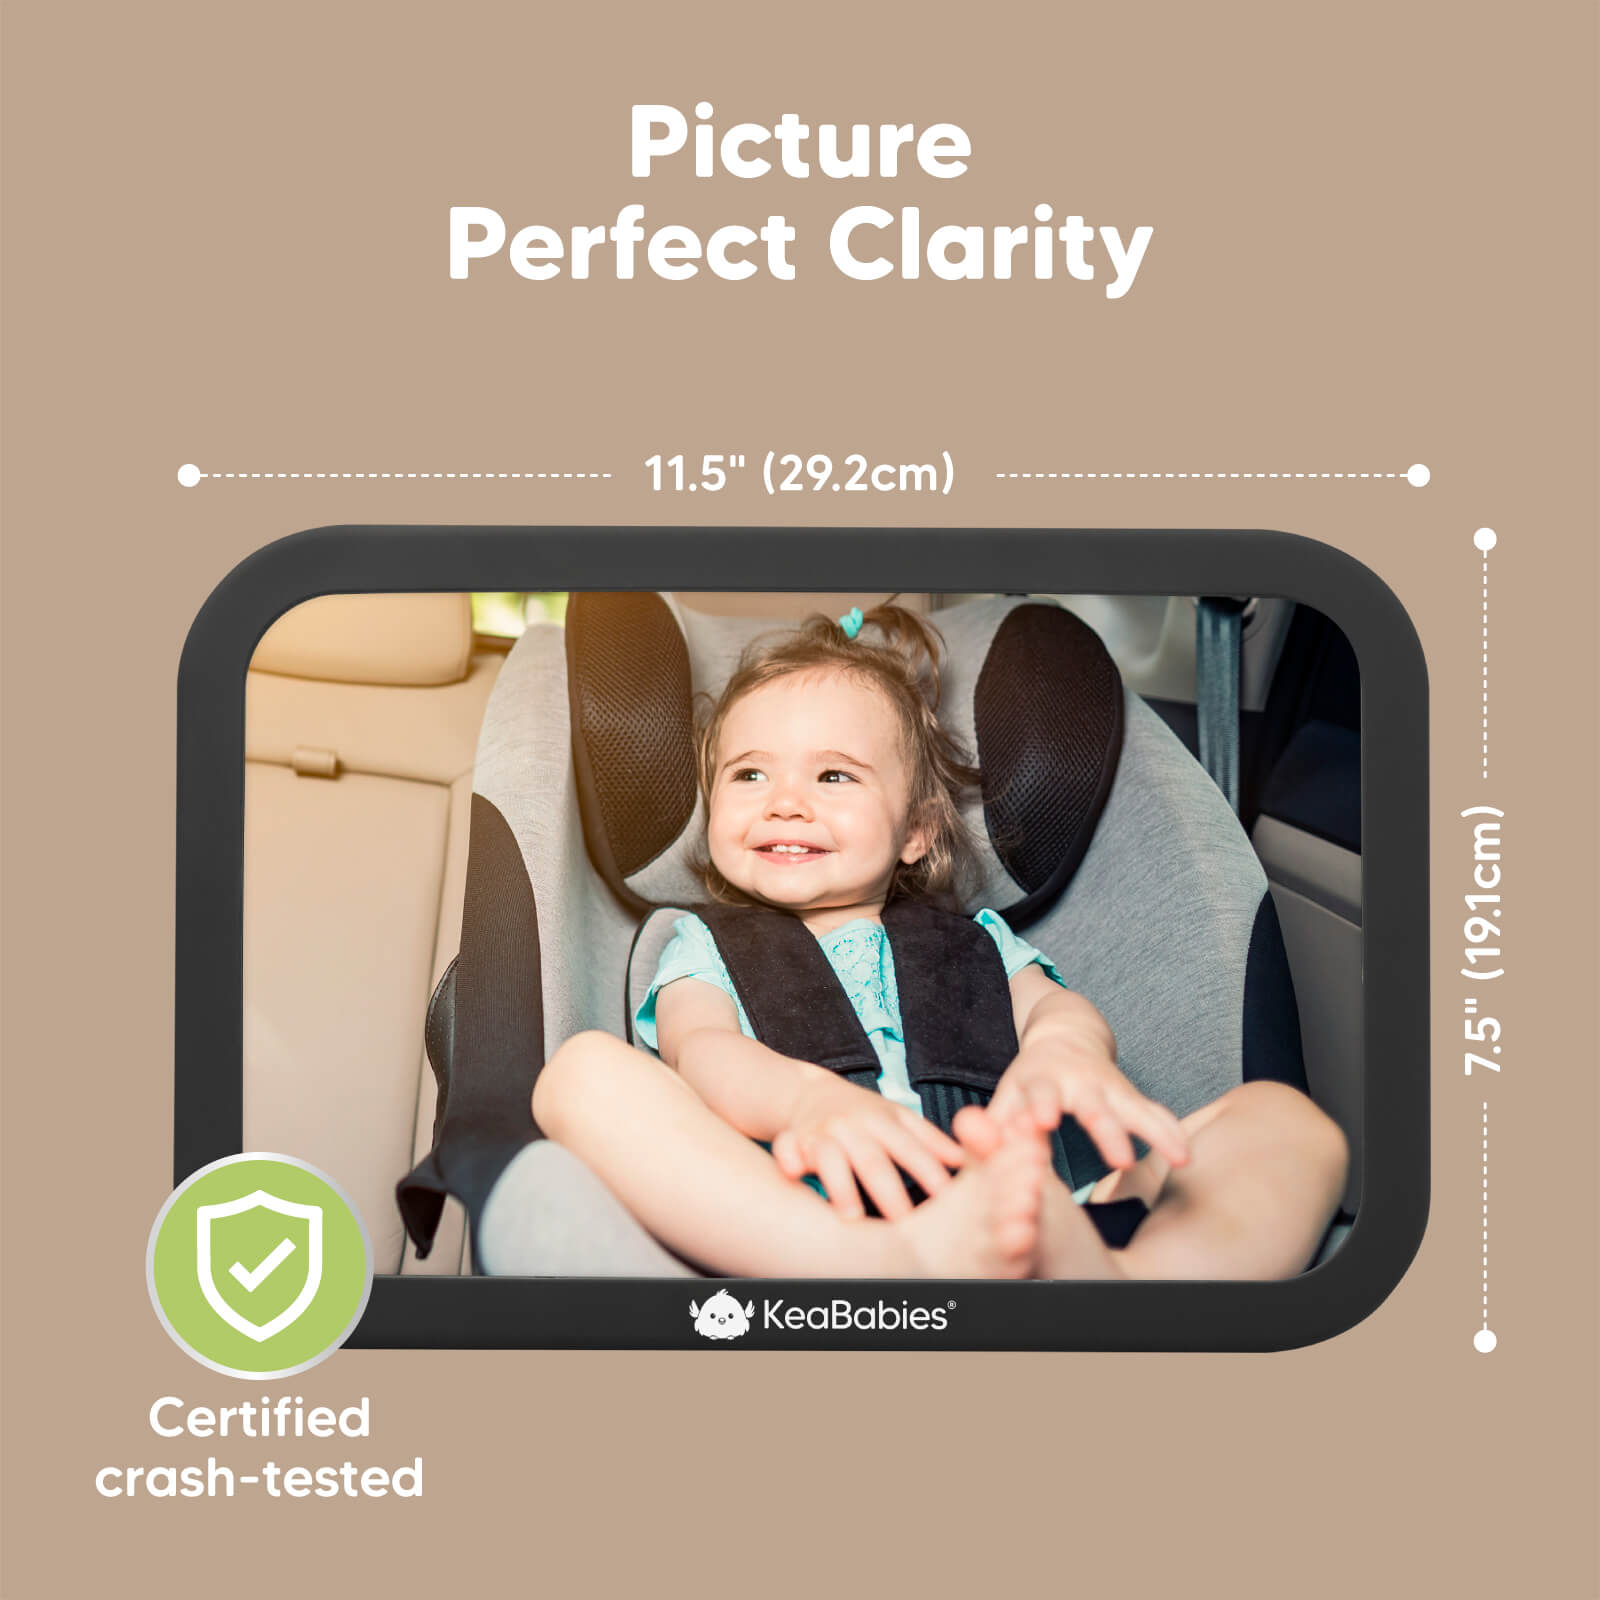 Karids Baby Car Mirror